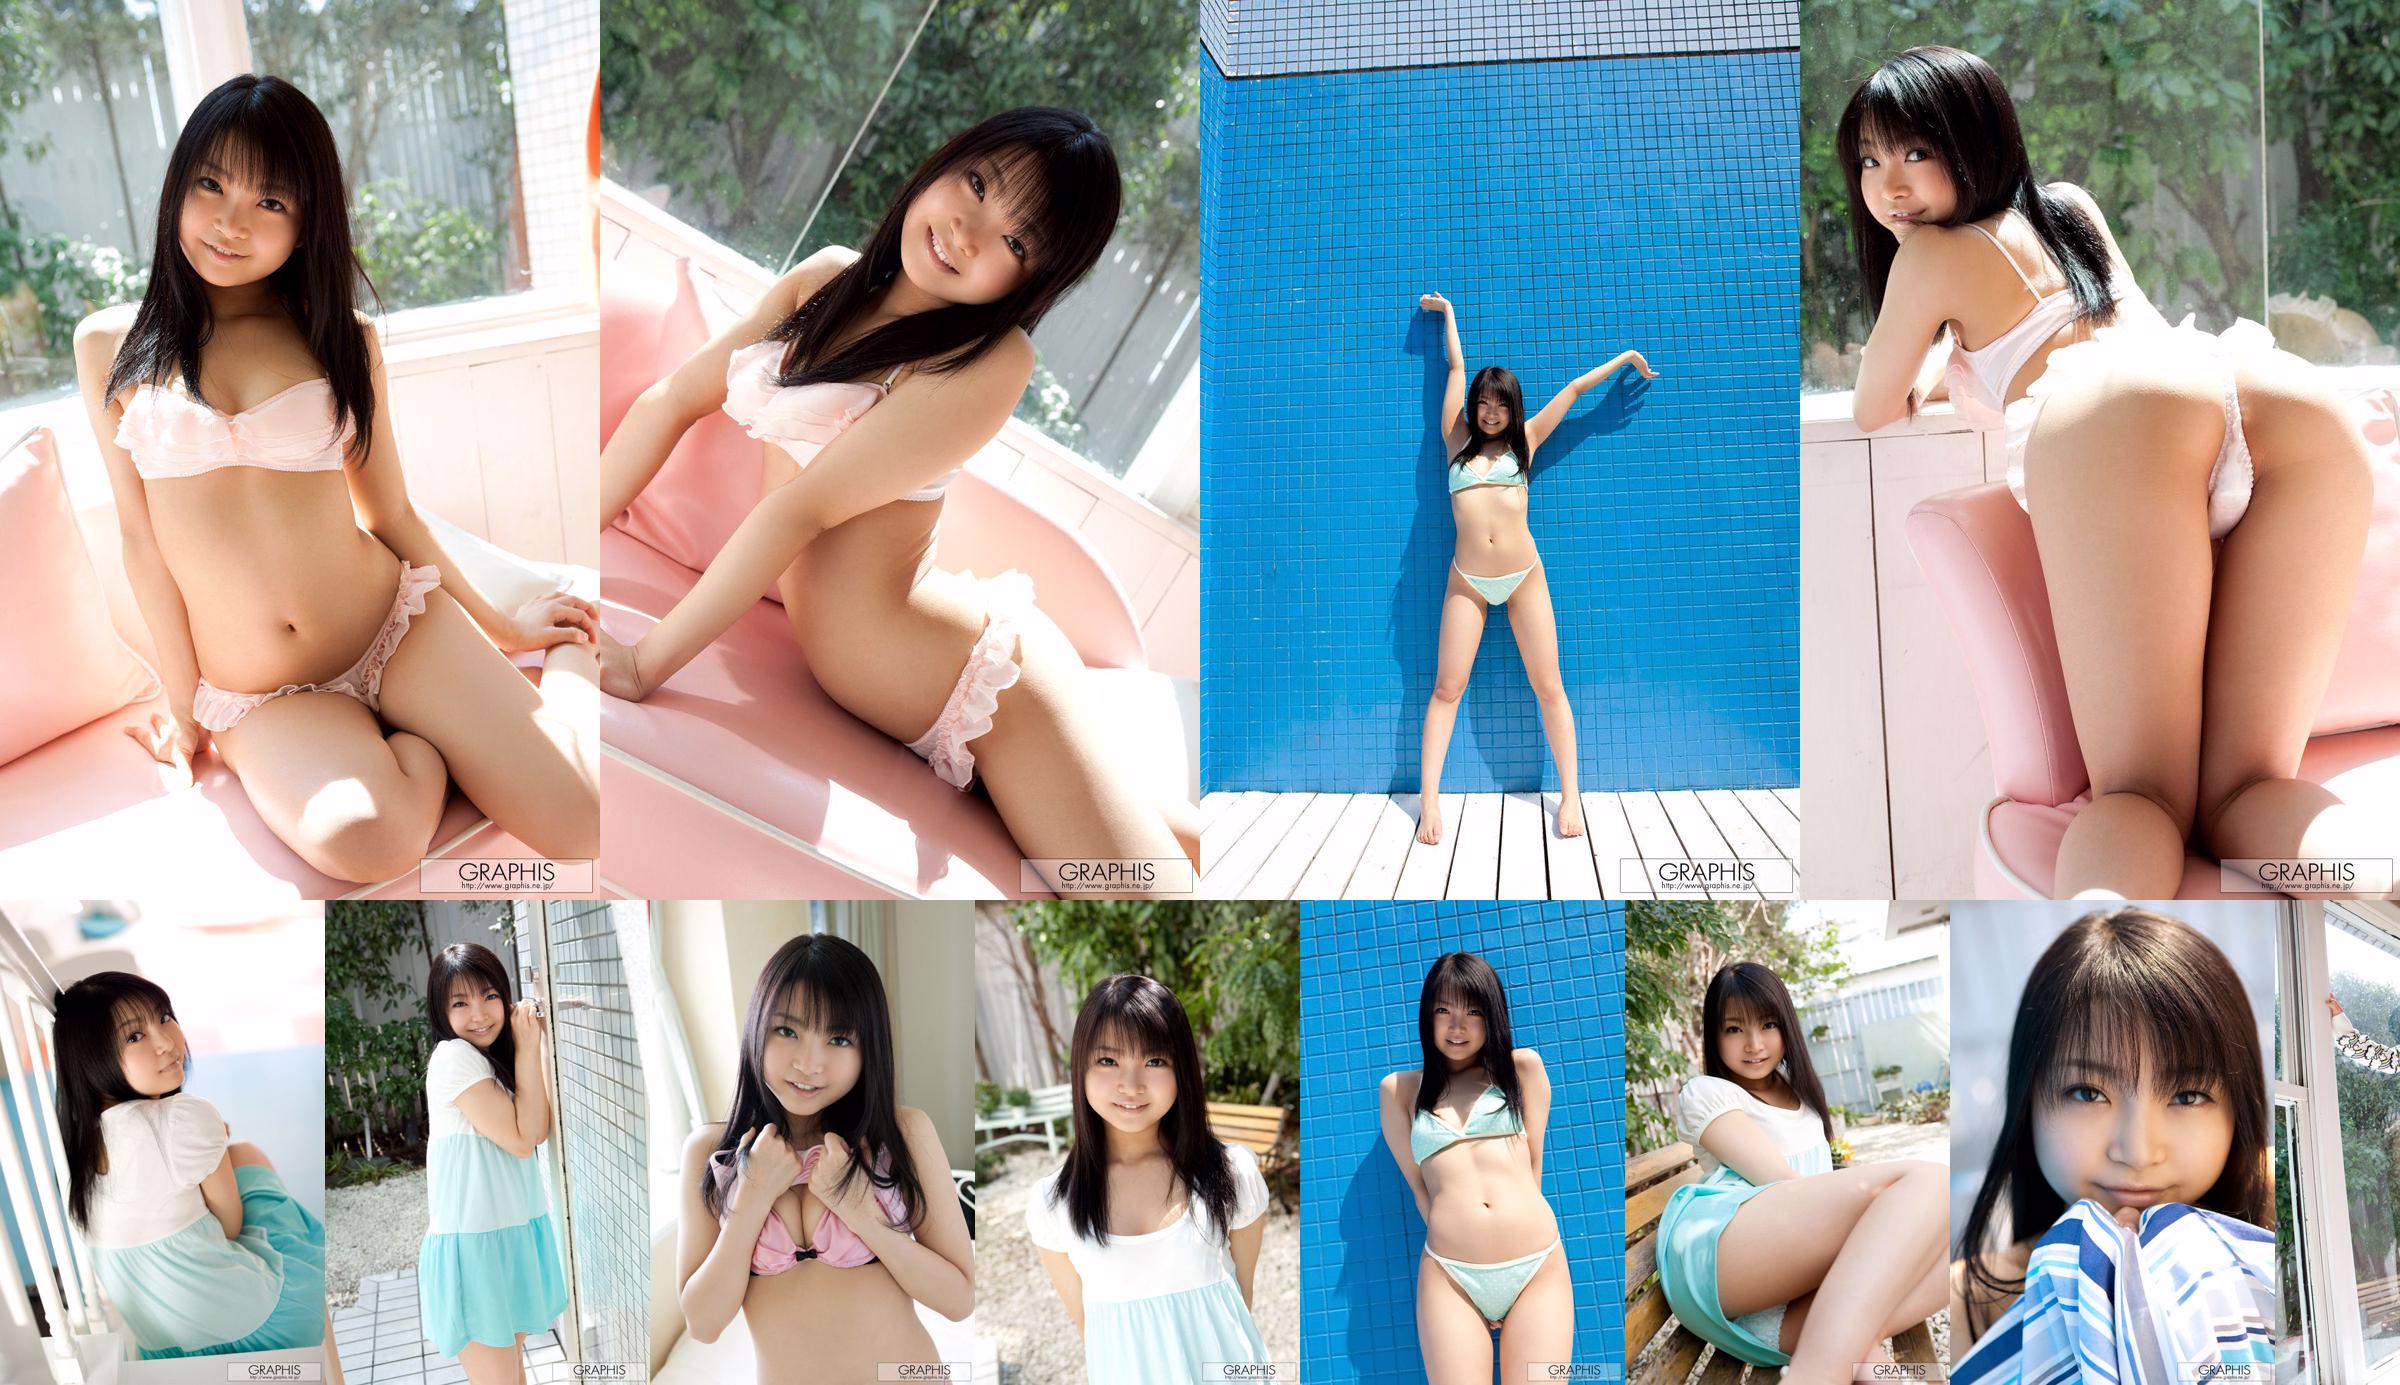 Chihiro Aoi / Chihiro Aoi [Graphis] Primera fotograbado Primera hija No.3c3748 Página 1